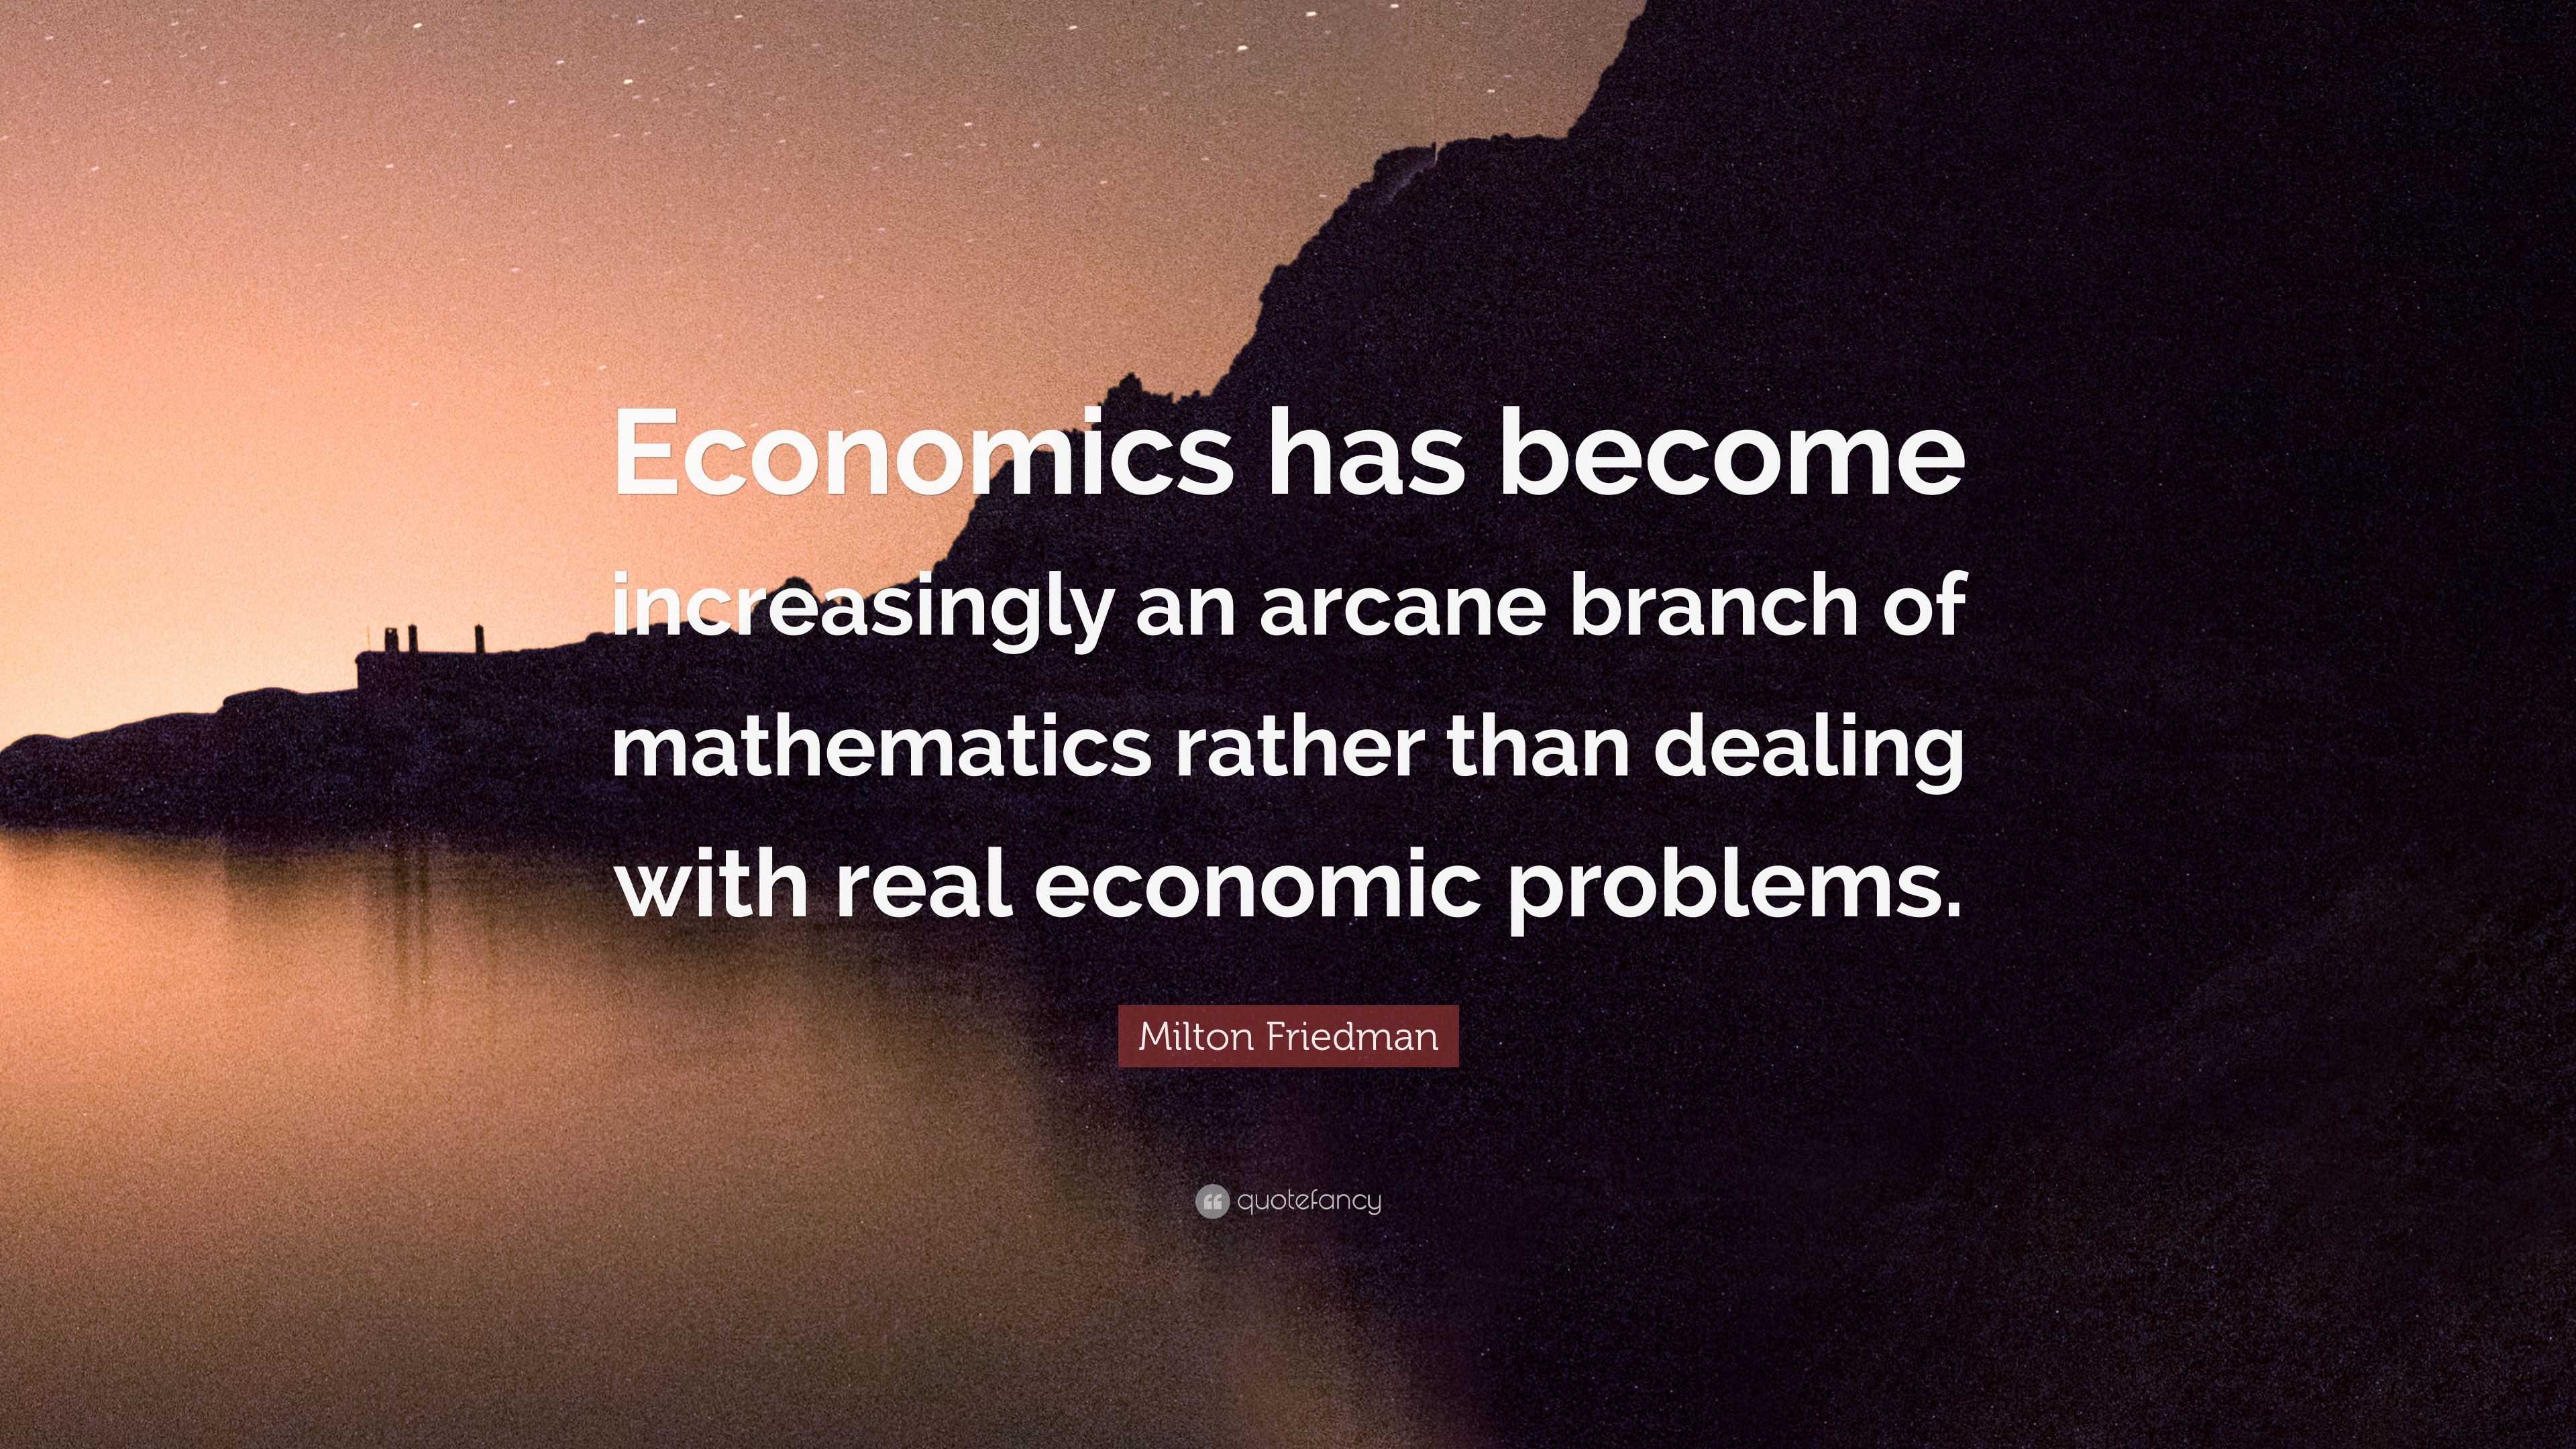 Milton Friedman Quote “Economics has increasingly an arcane